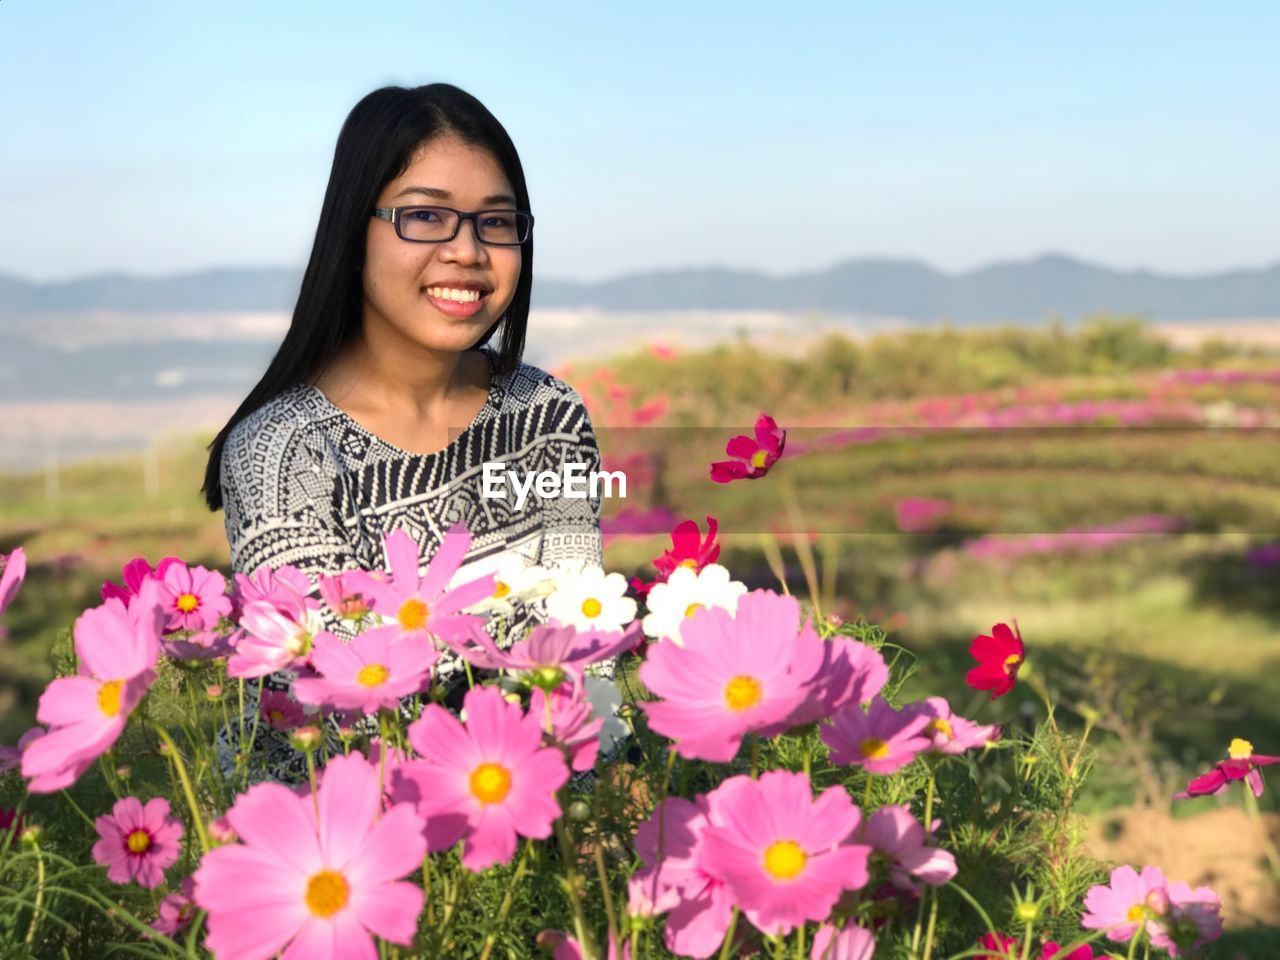 Portrait of smiling woman by flowering plants on field